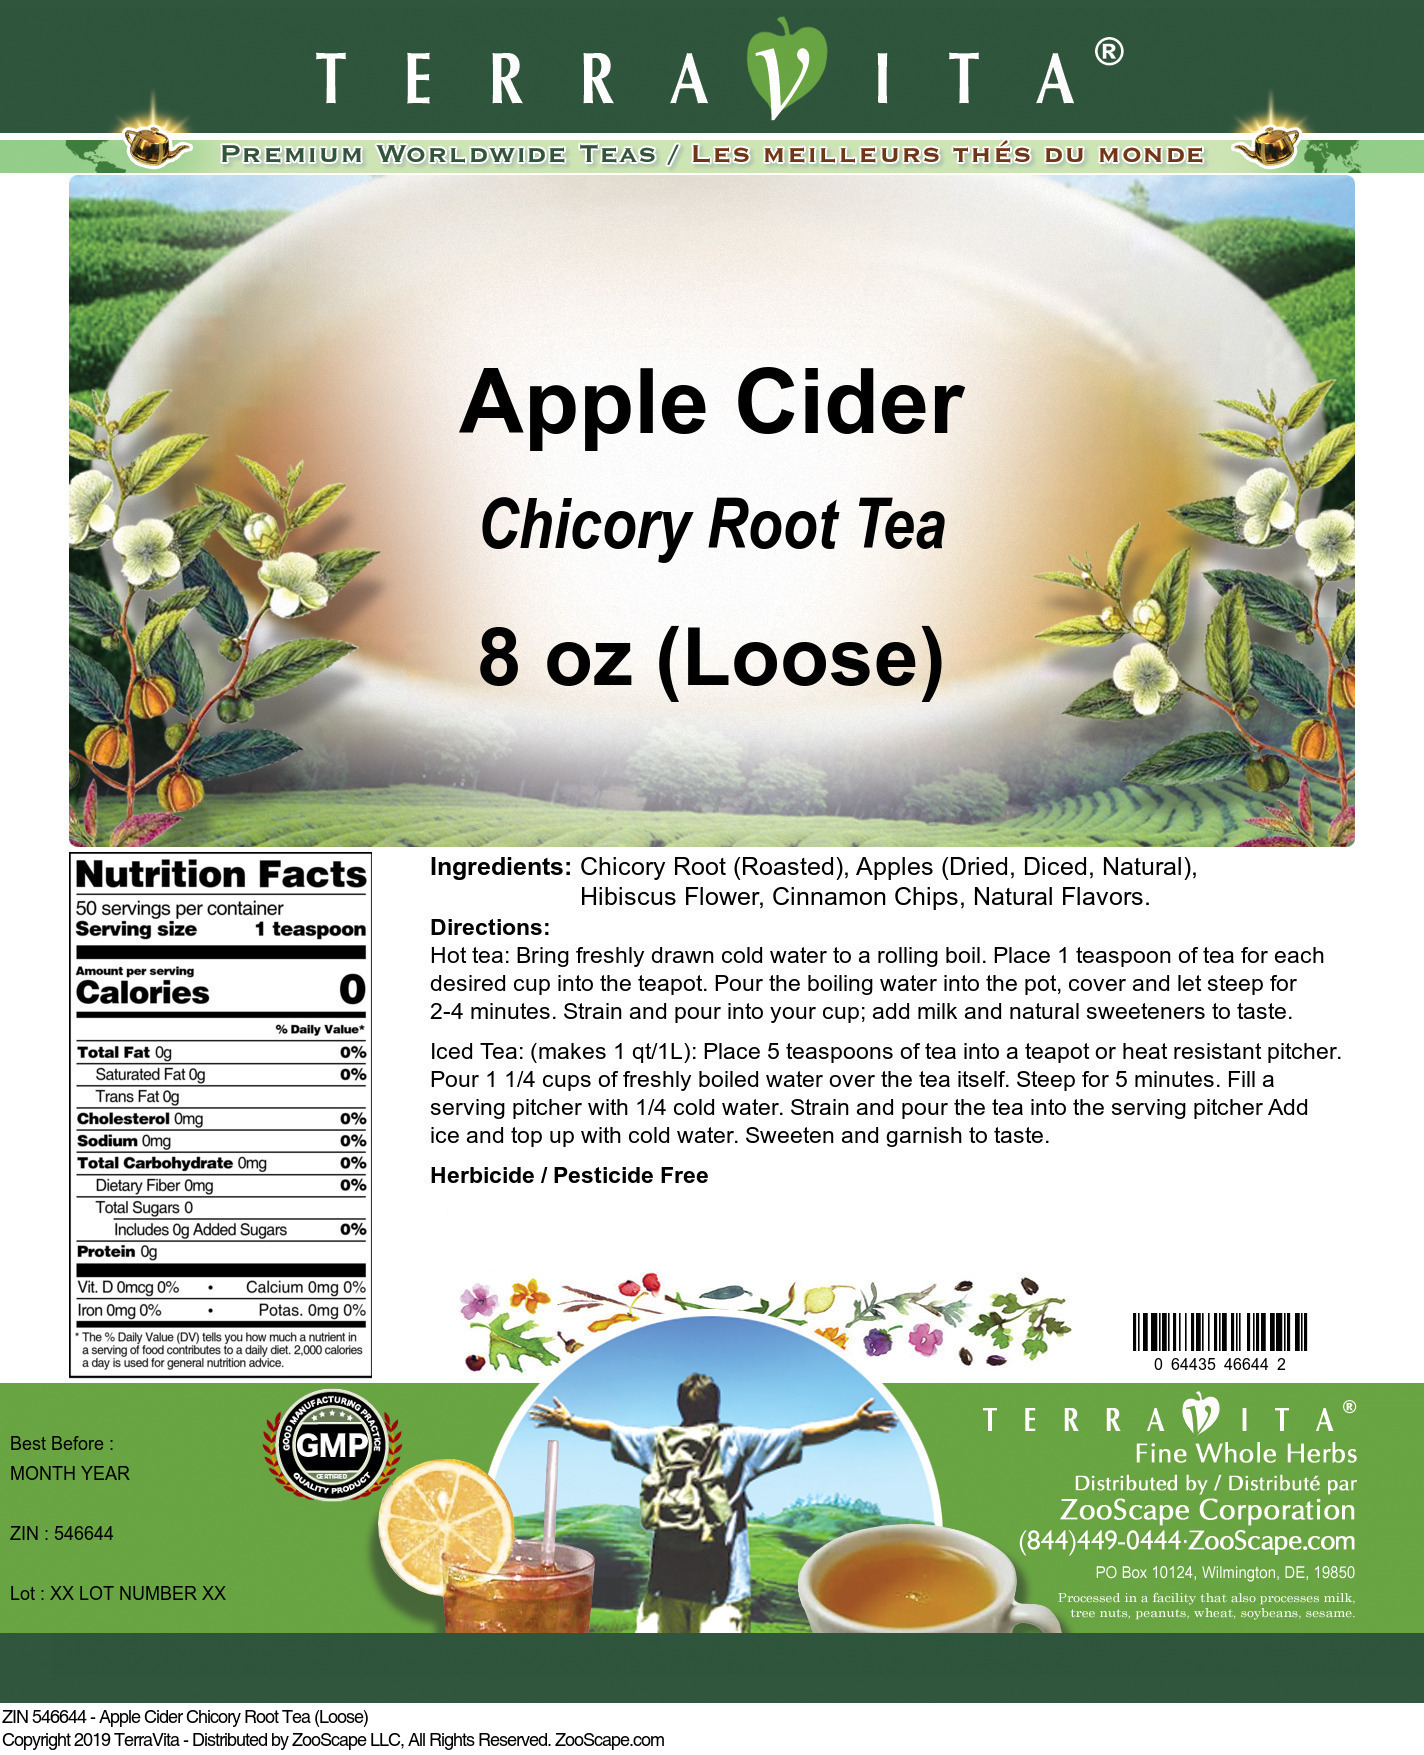 Apple Cider Chicory Root Tea (Loose) - Label